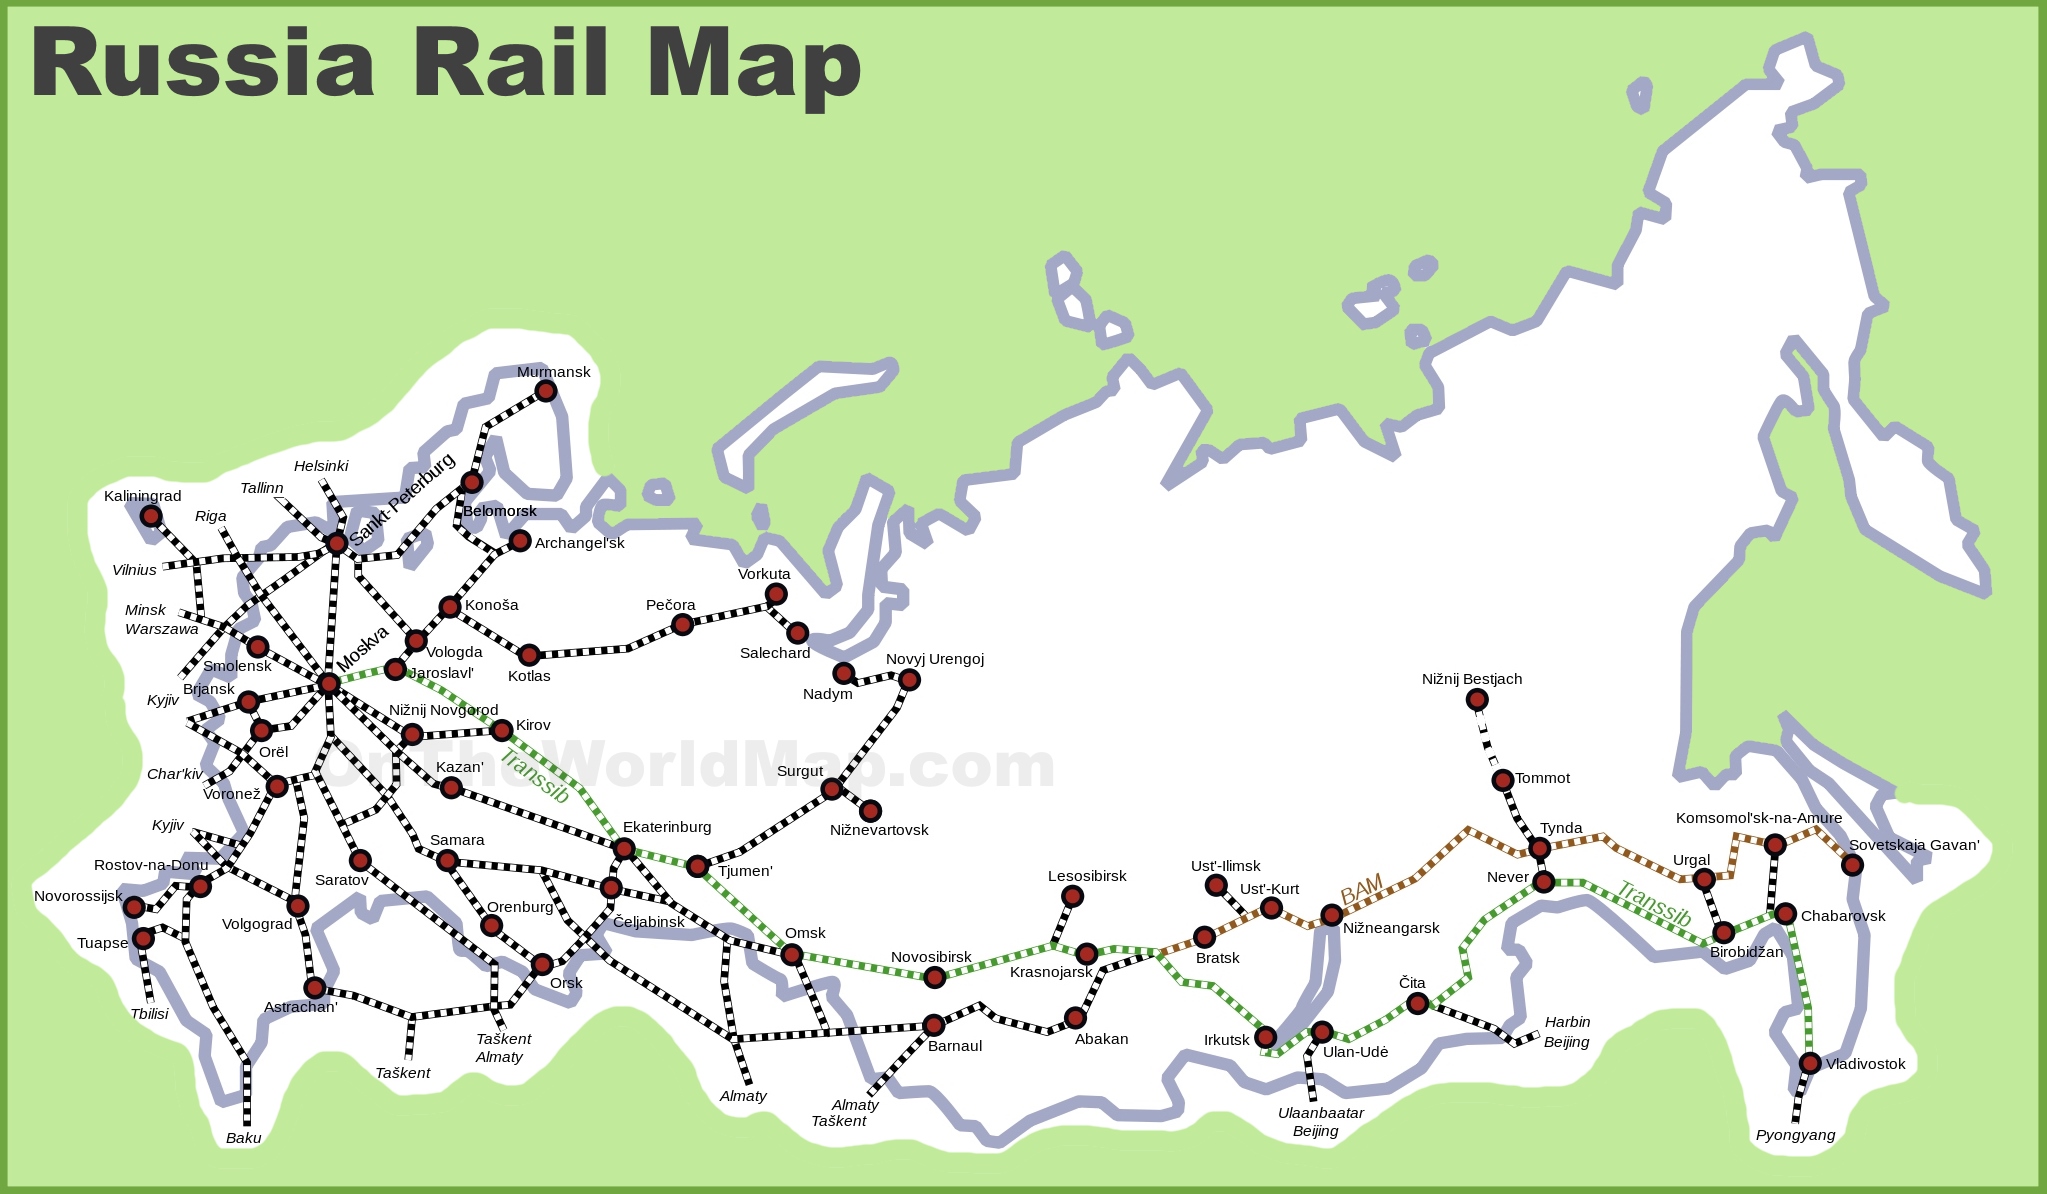 The Russian Railways 25